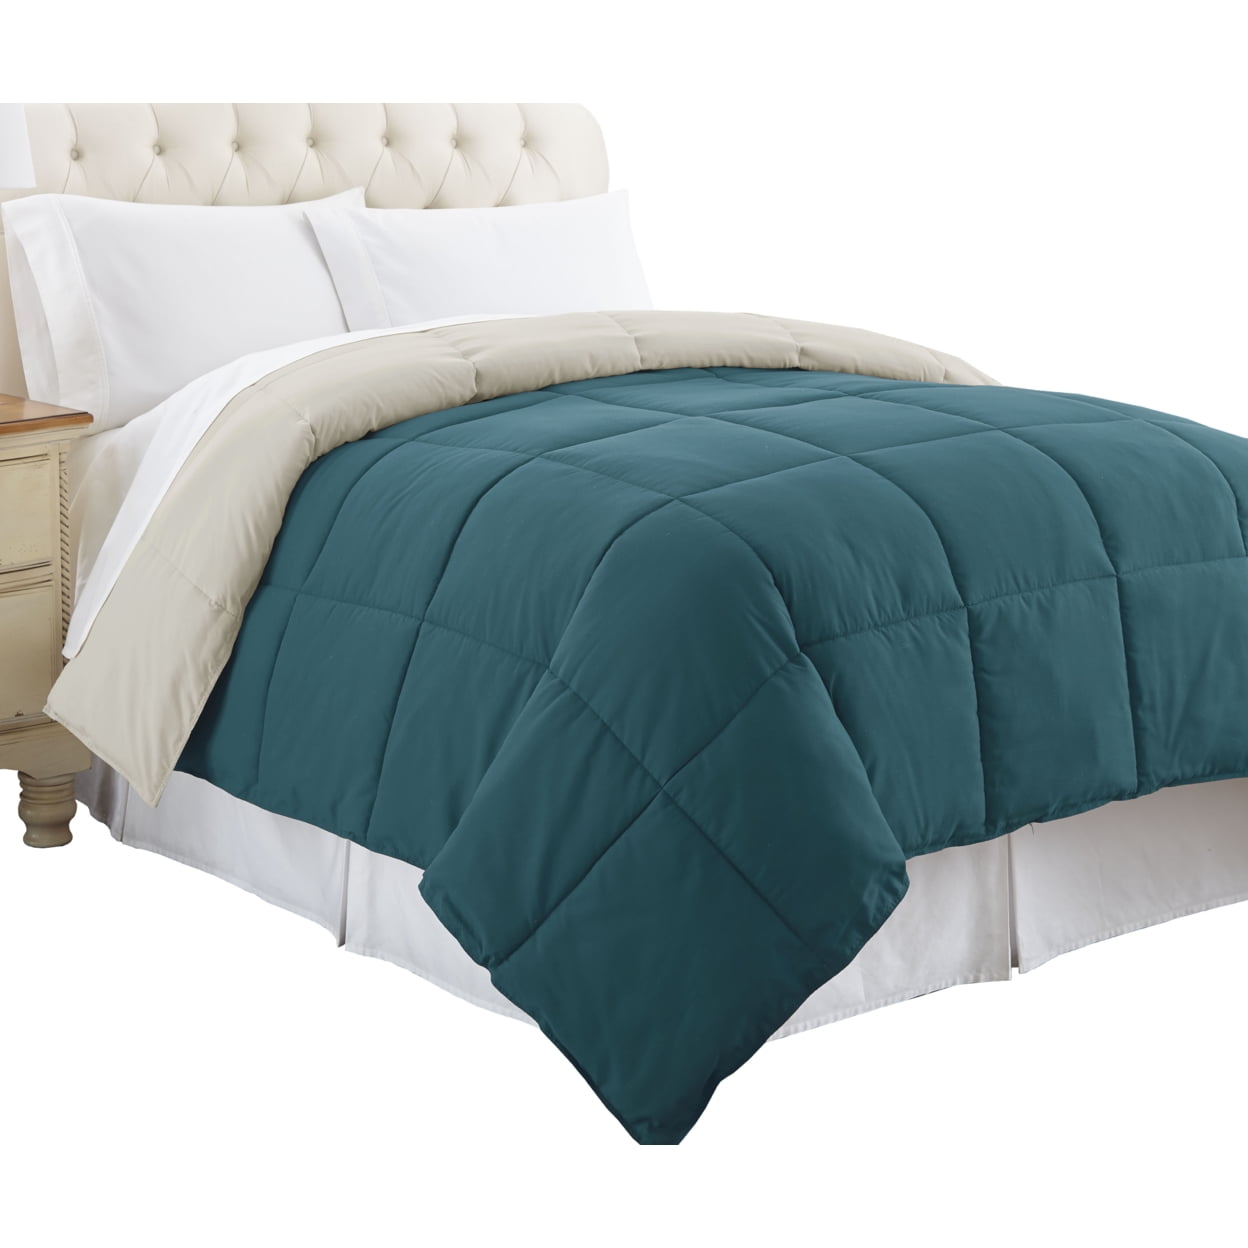 Bm46025 Genoa Queen Size Box Quilted Reversible Comforter, Blue & Gray